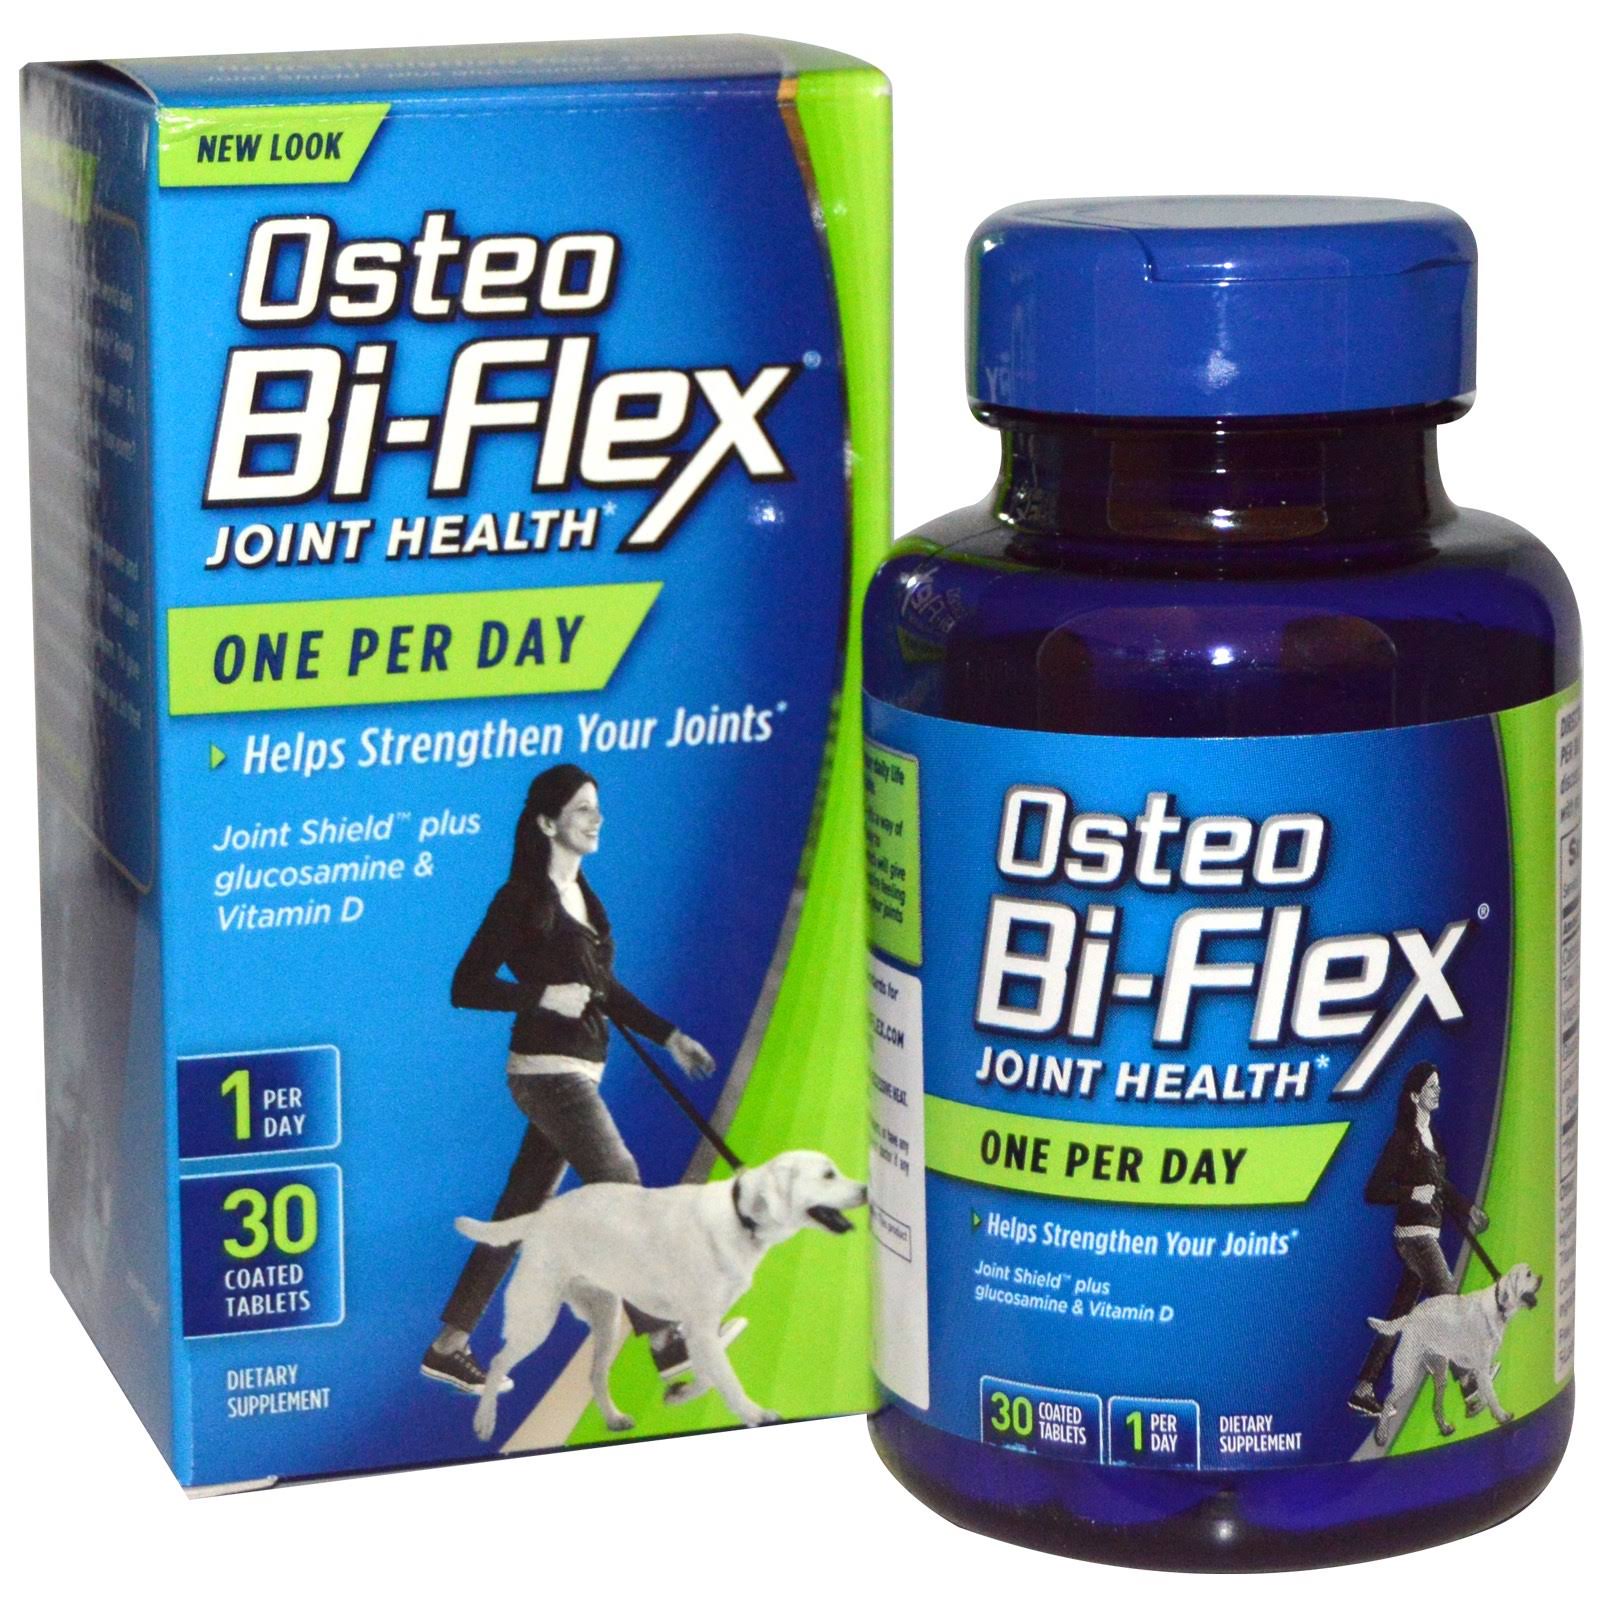 Osteo Bi-Flex One Per Day Dietary Supplement - 30 Tablets